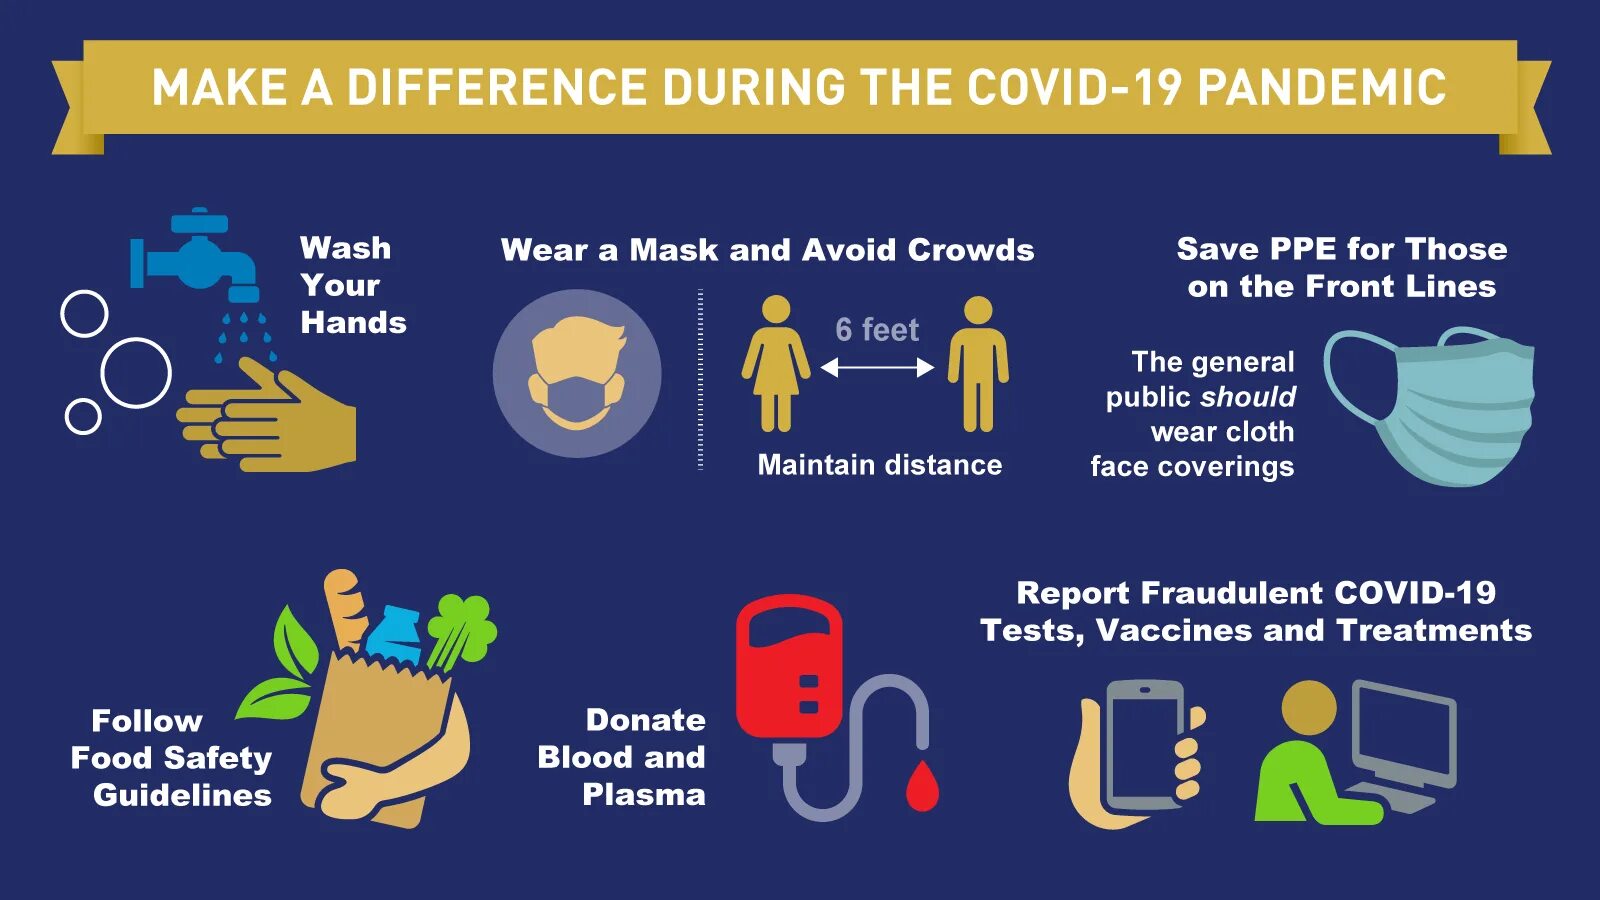 Shall posting. Различие for и during. Коронавирус Covid-19. Инфографика Covid.